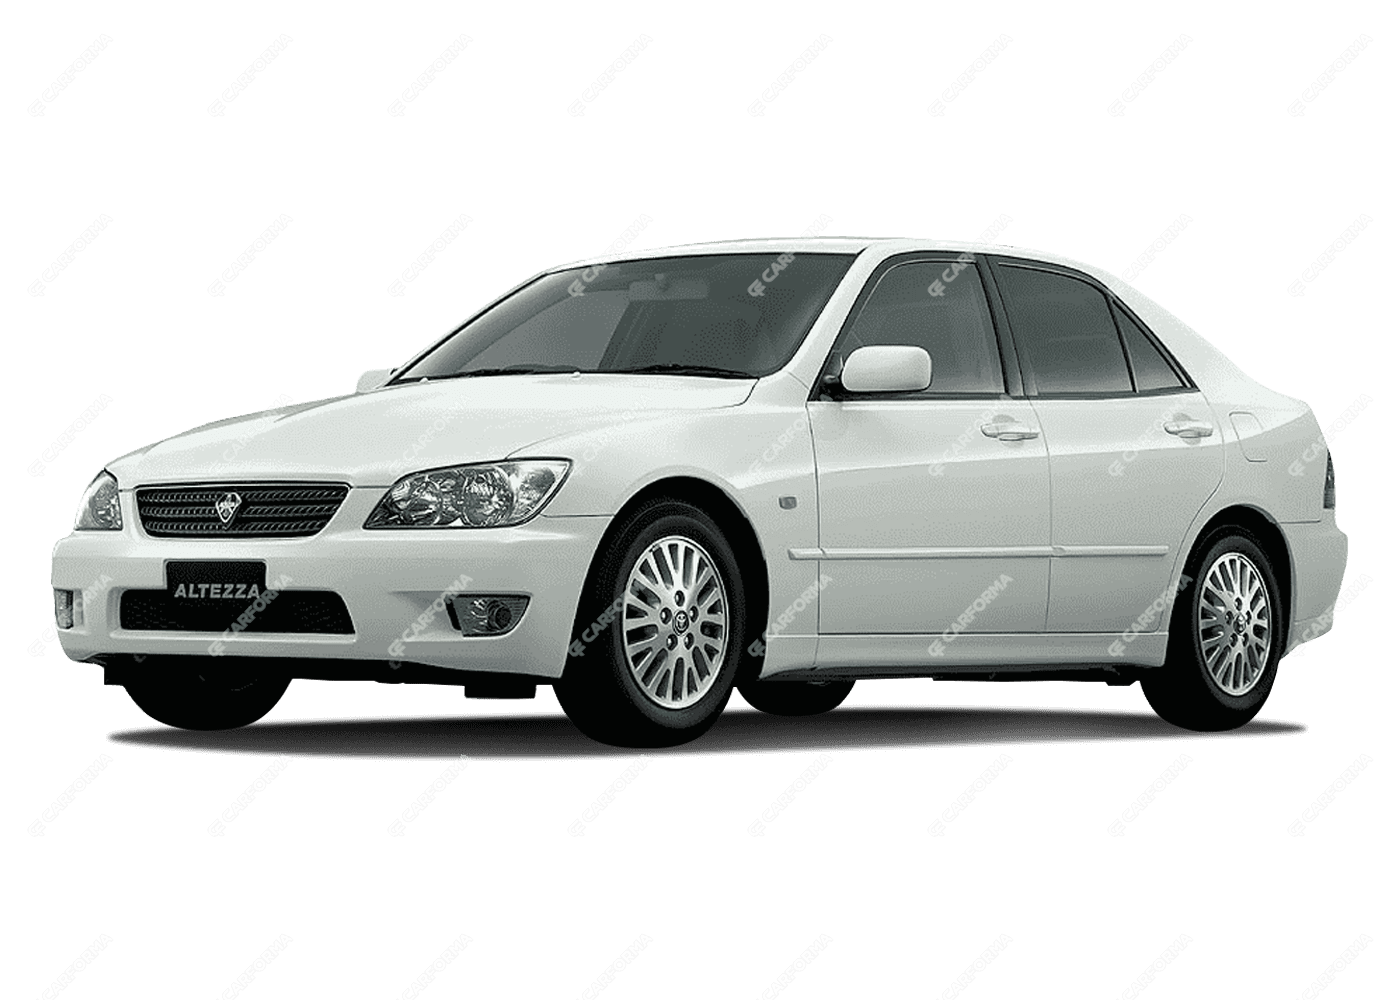 Коврики на Toyota Altezza 1998 - 2005 на заказ с доставкой в Новозыбков, Брянская обл.